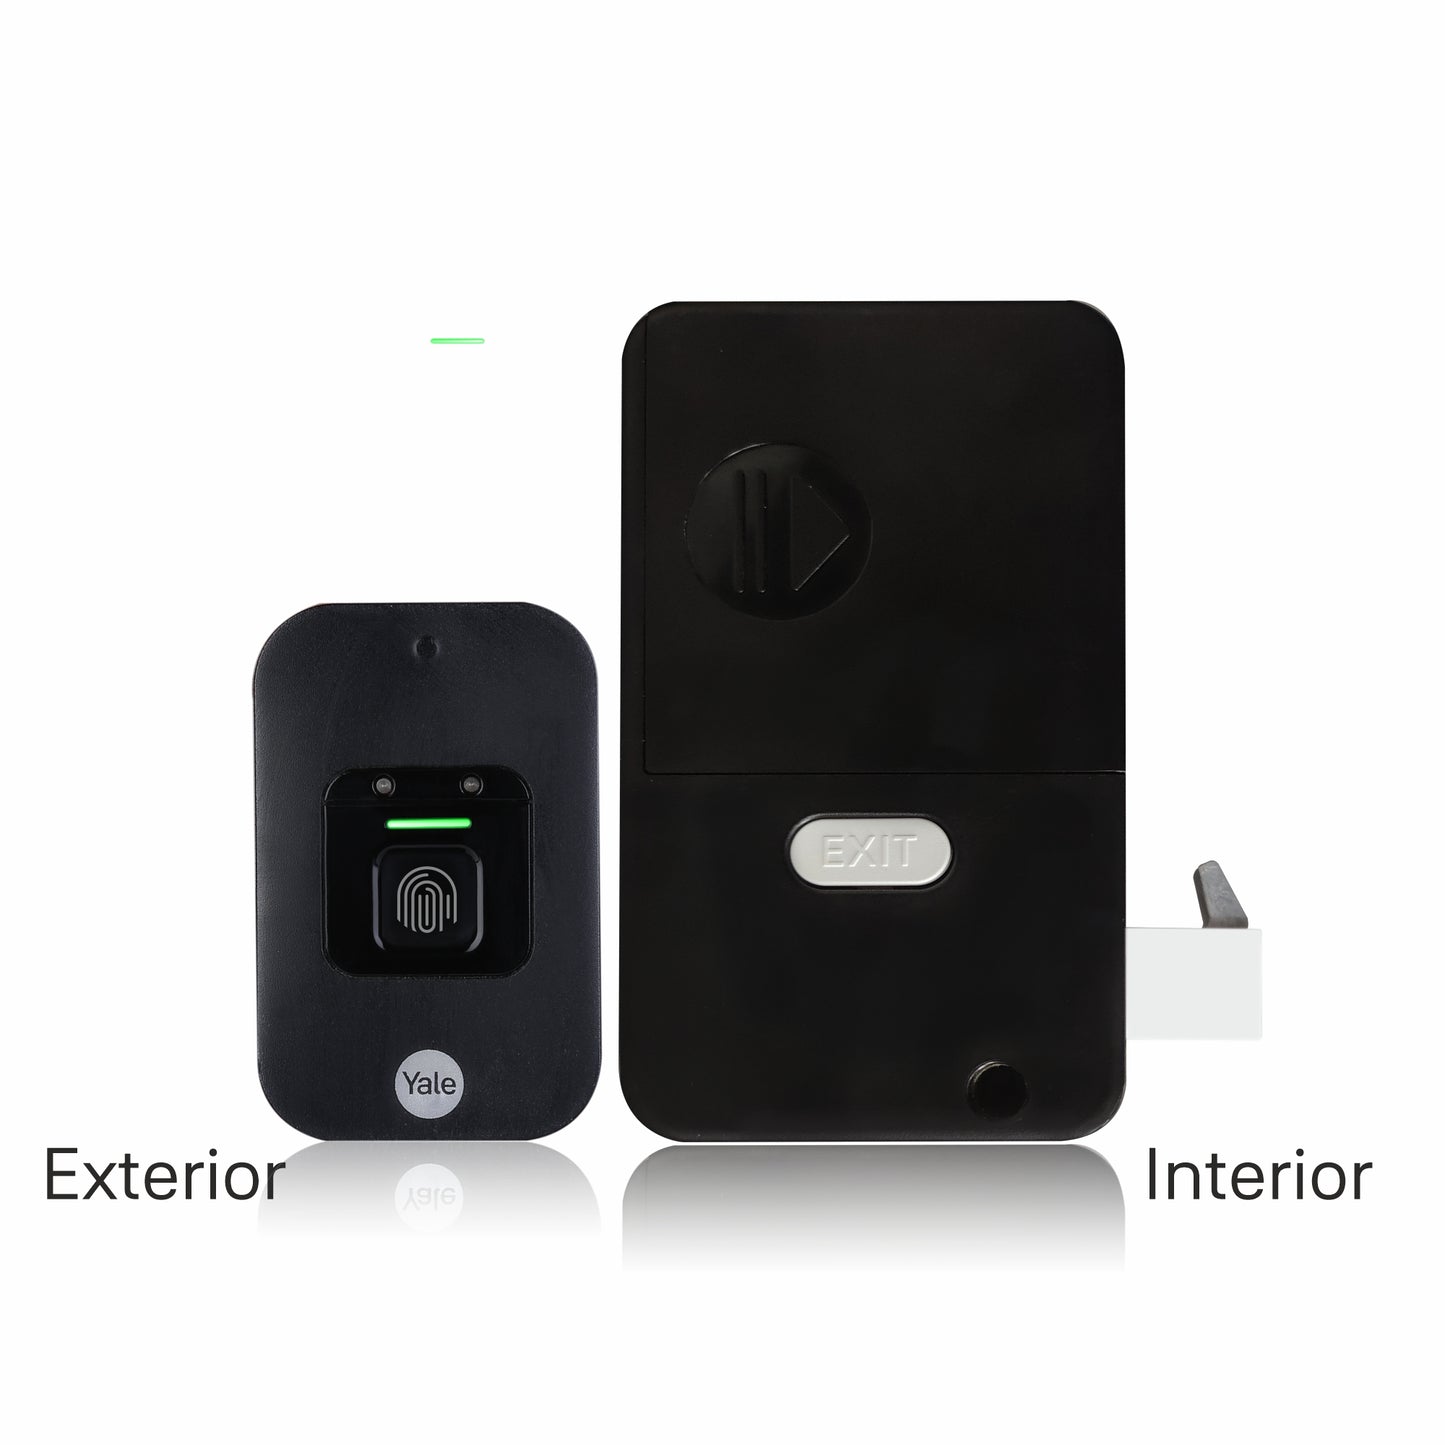 Fingerprint Digital Wardrobe Lock for Openable Door- Mounted- Black